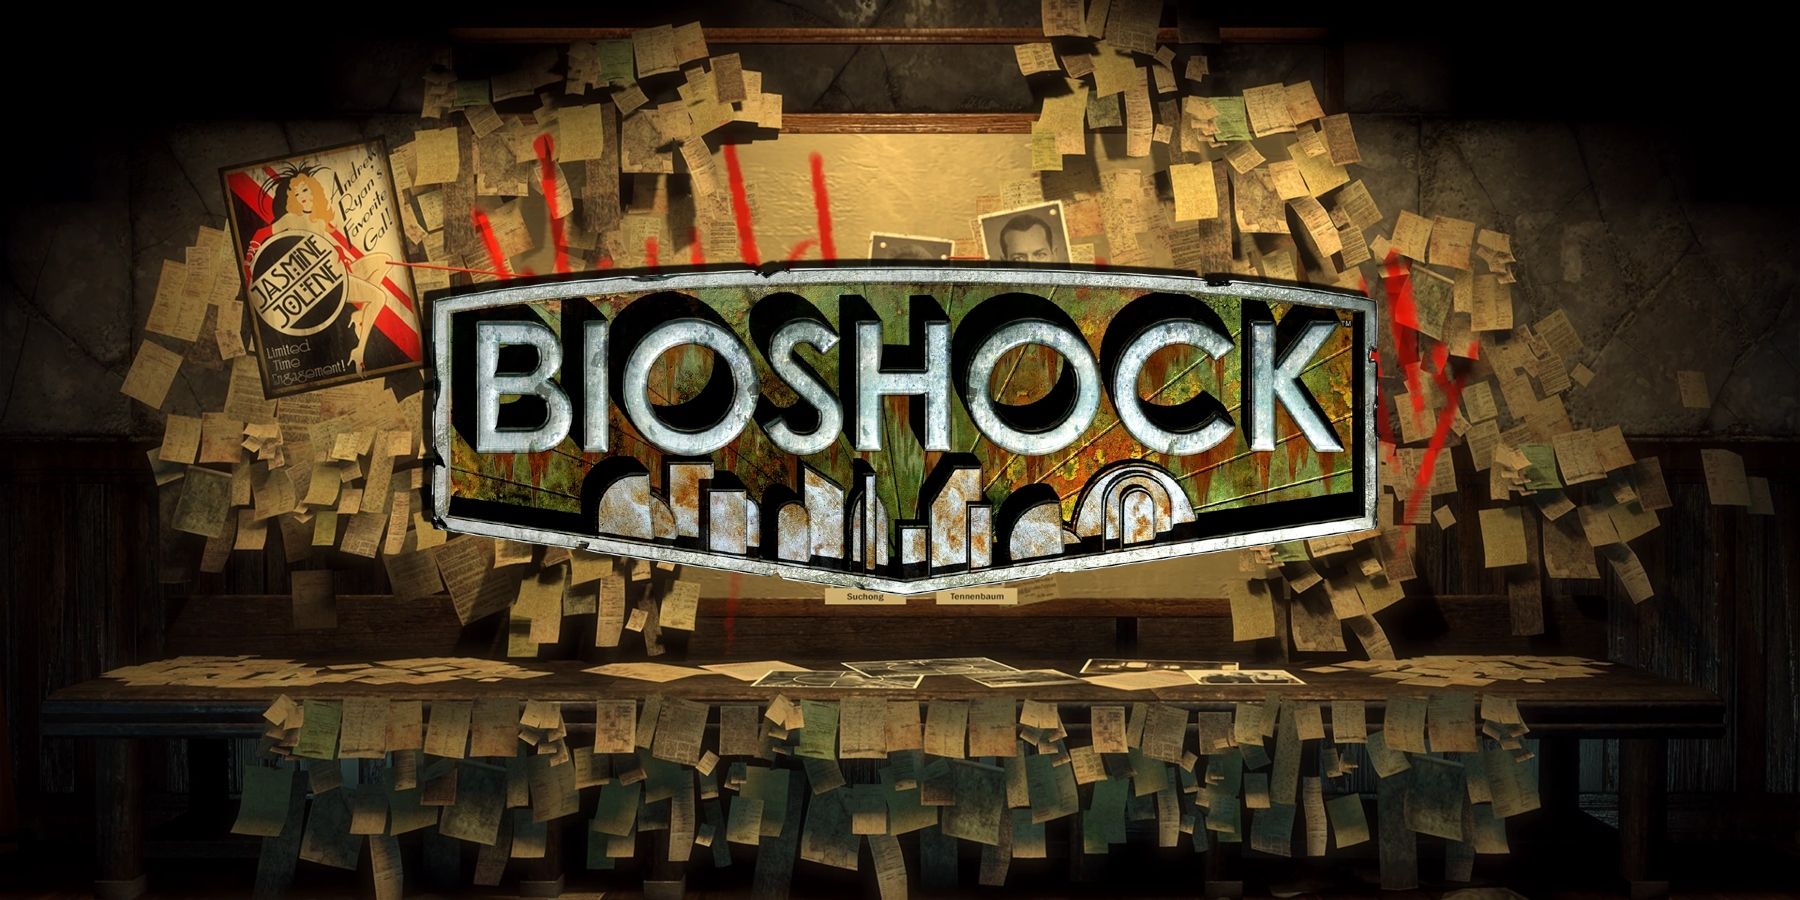 BioShock Would you Kindly Wall